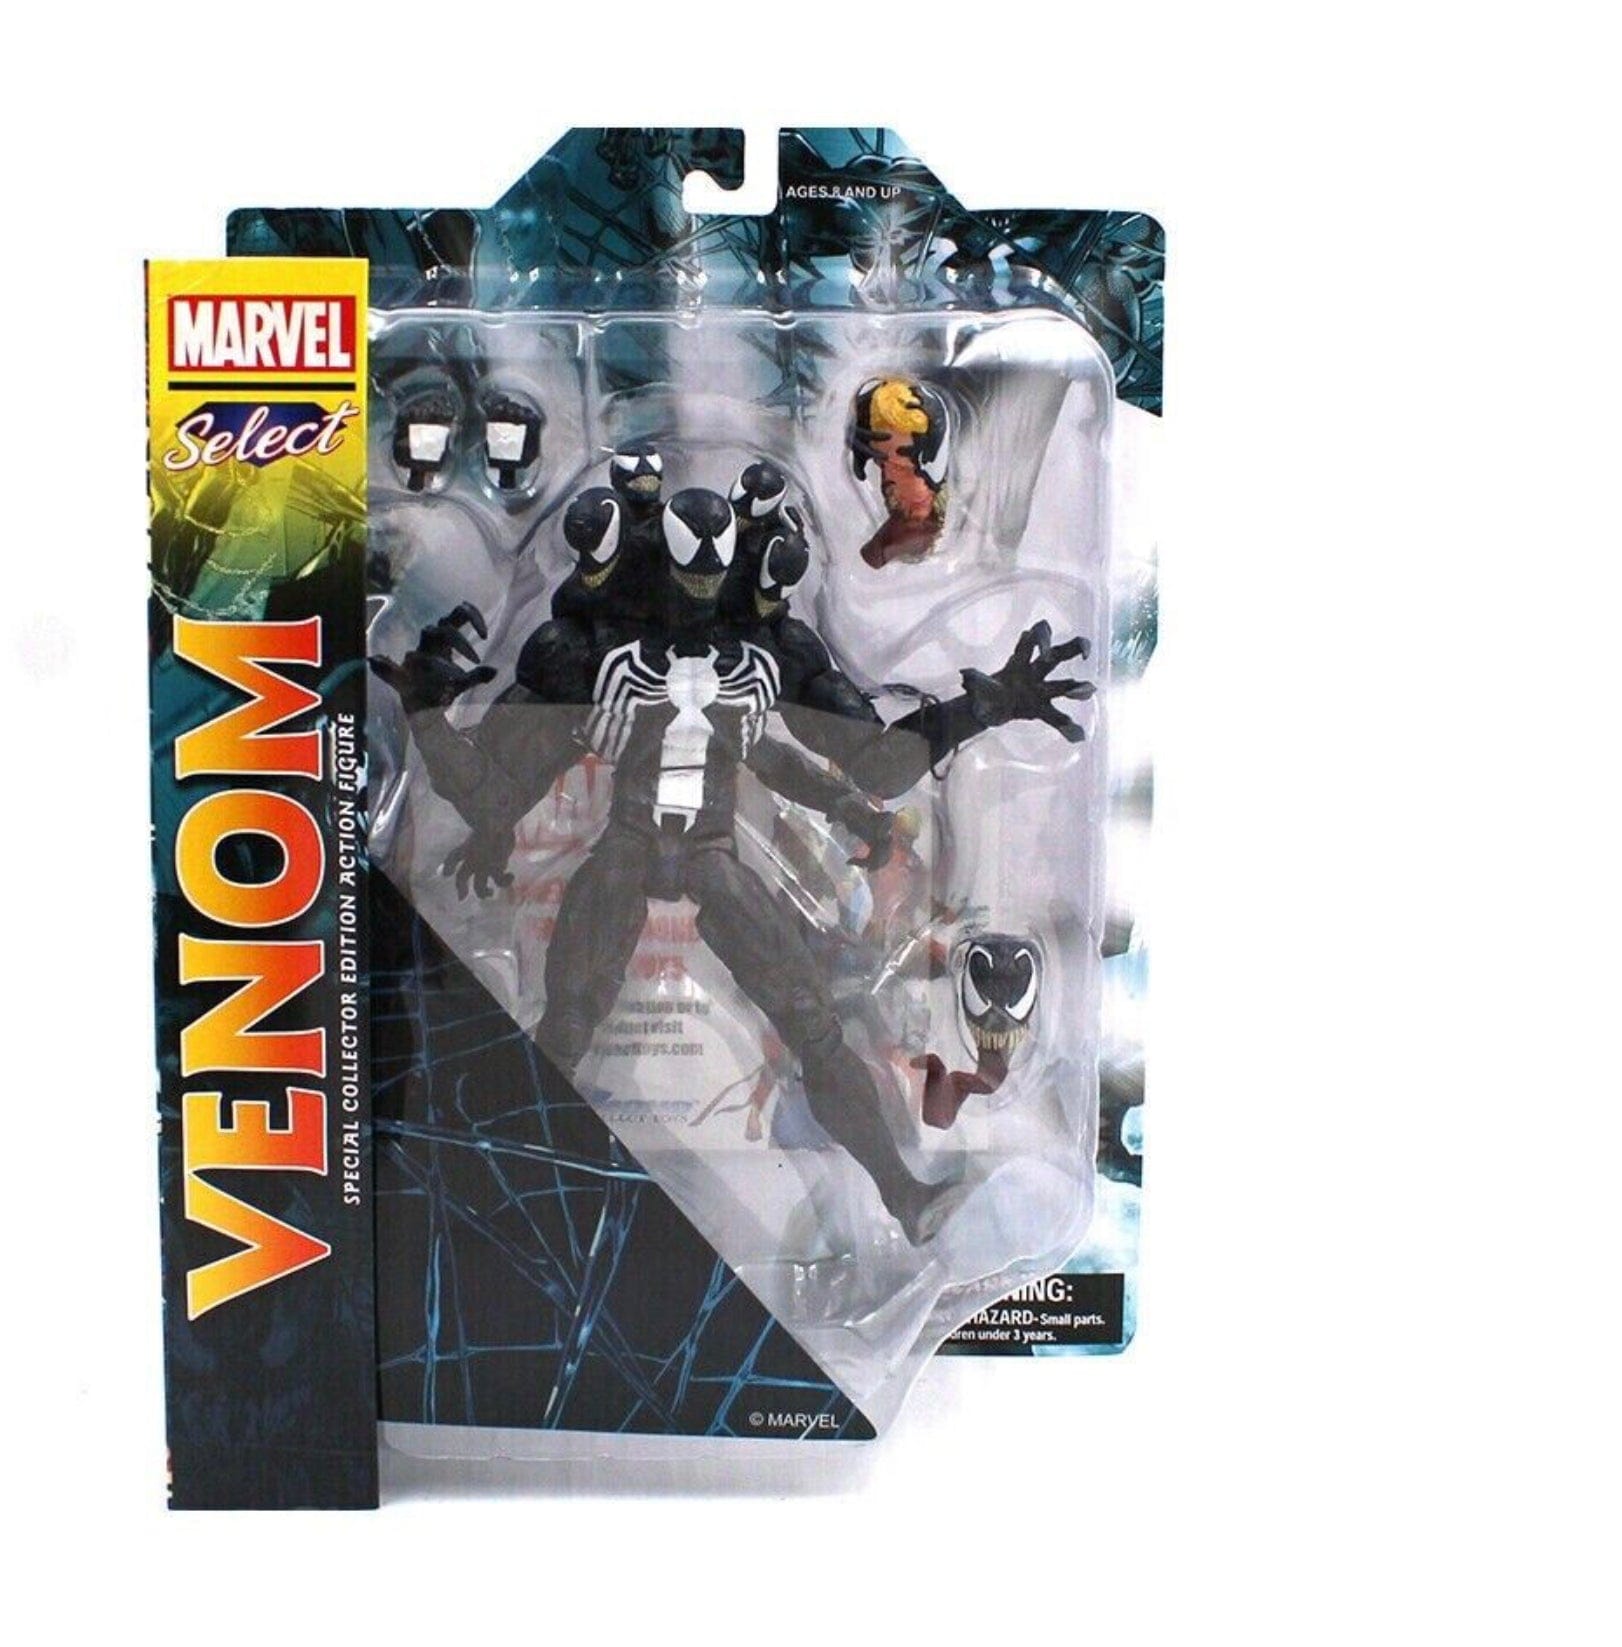 Marvel Select Venom Action Figure Display Box